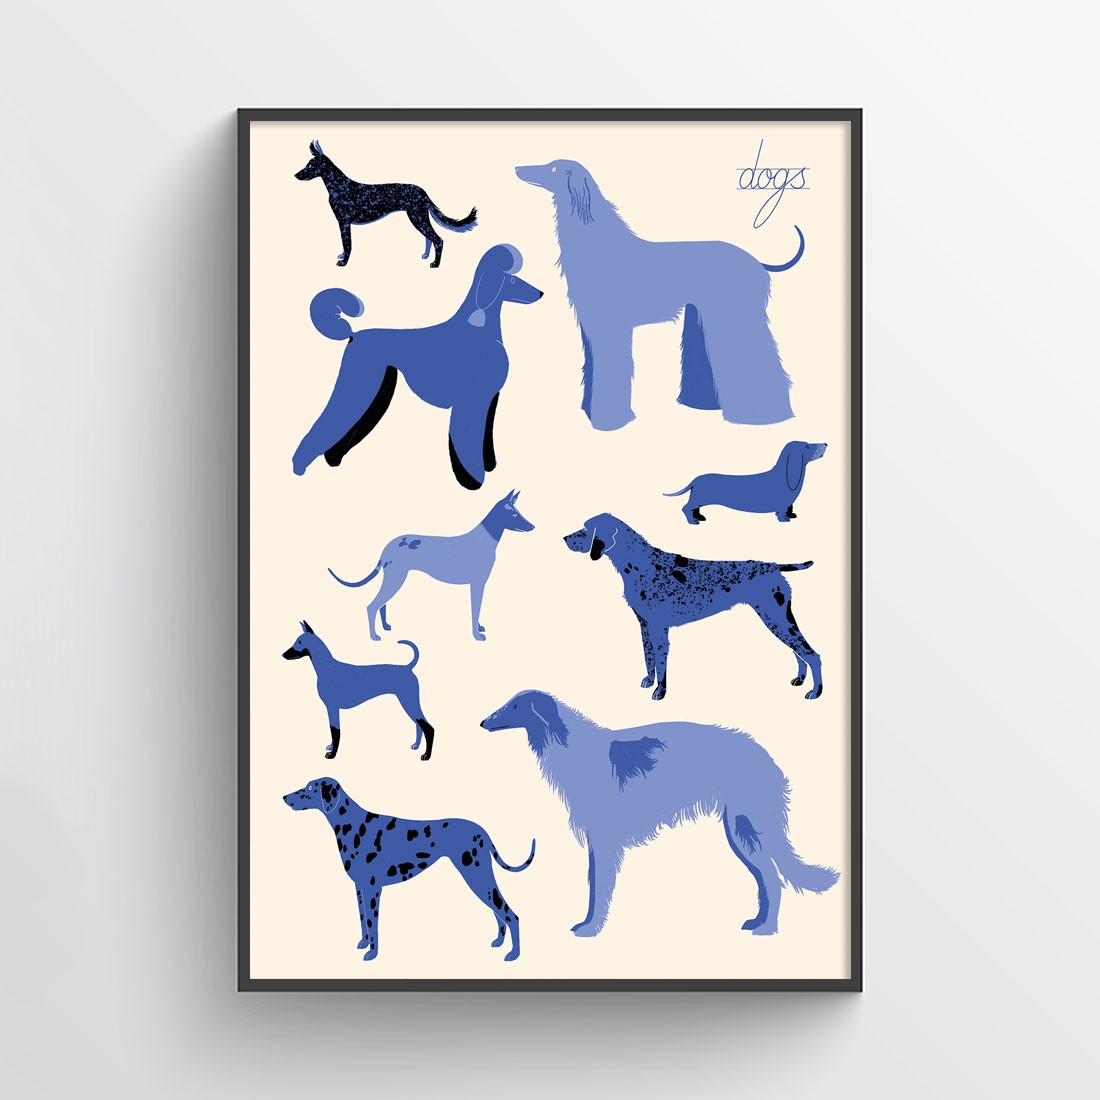 Plakat "Dogs" Kai Wojtygi